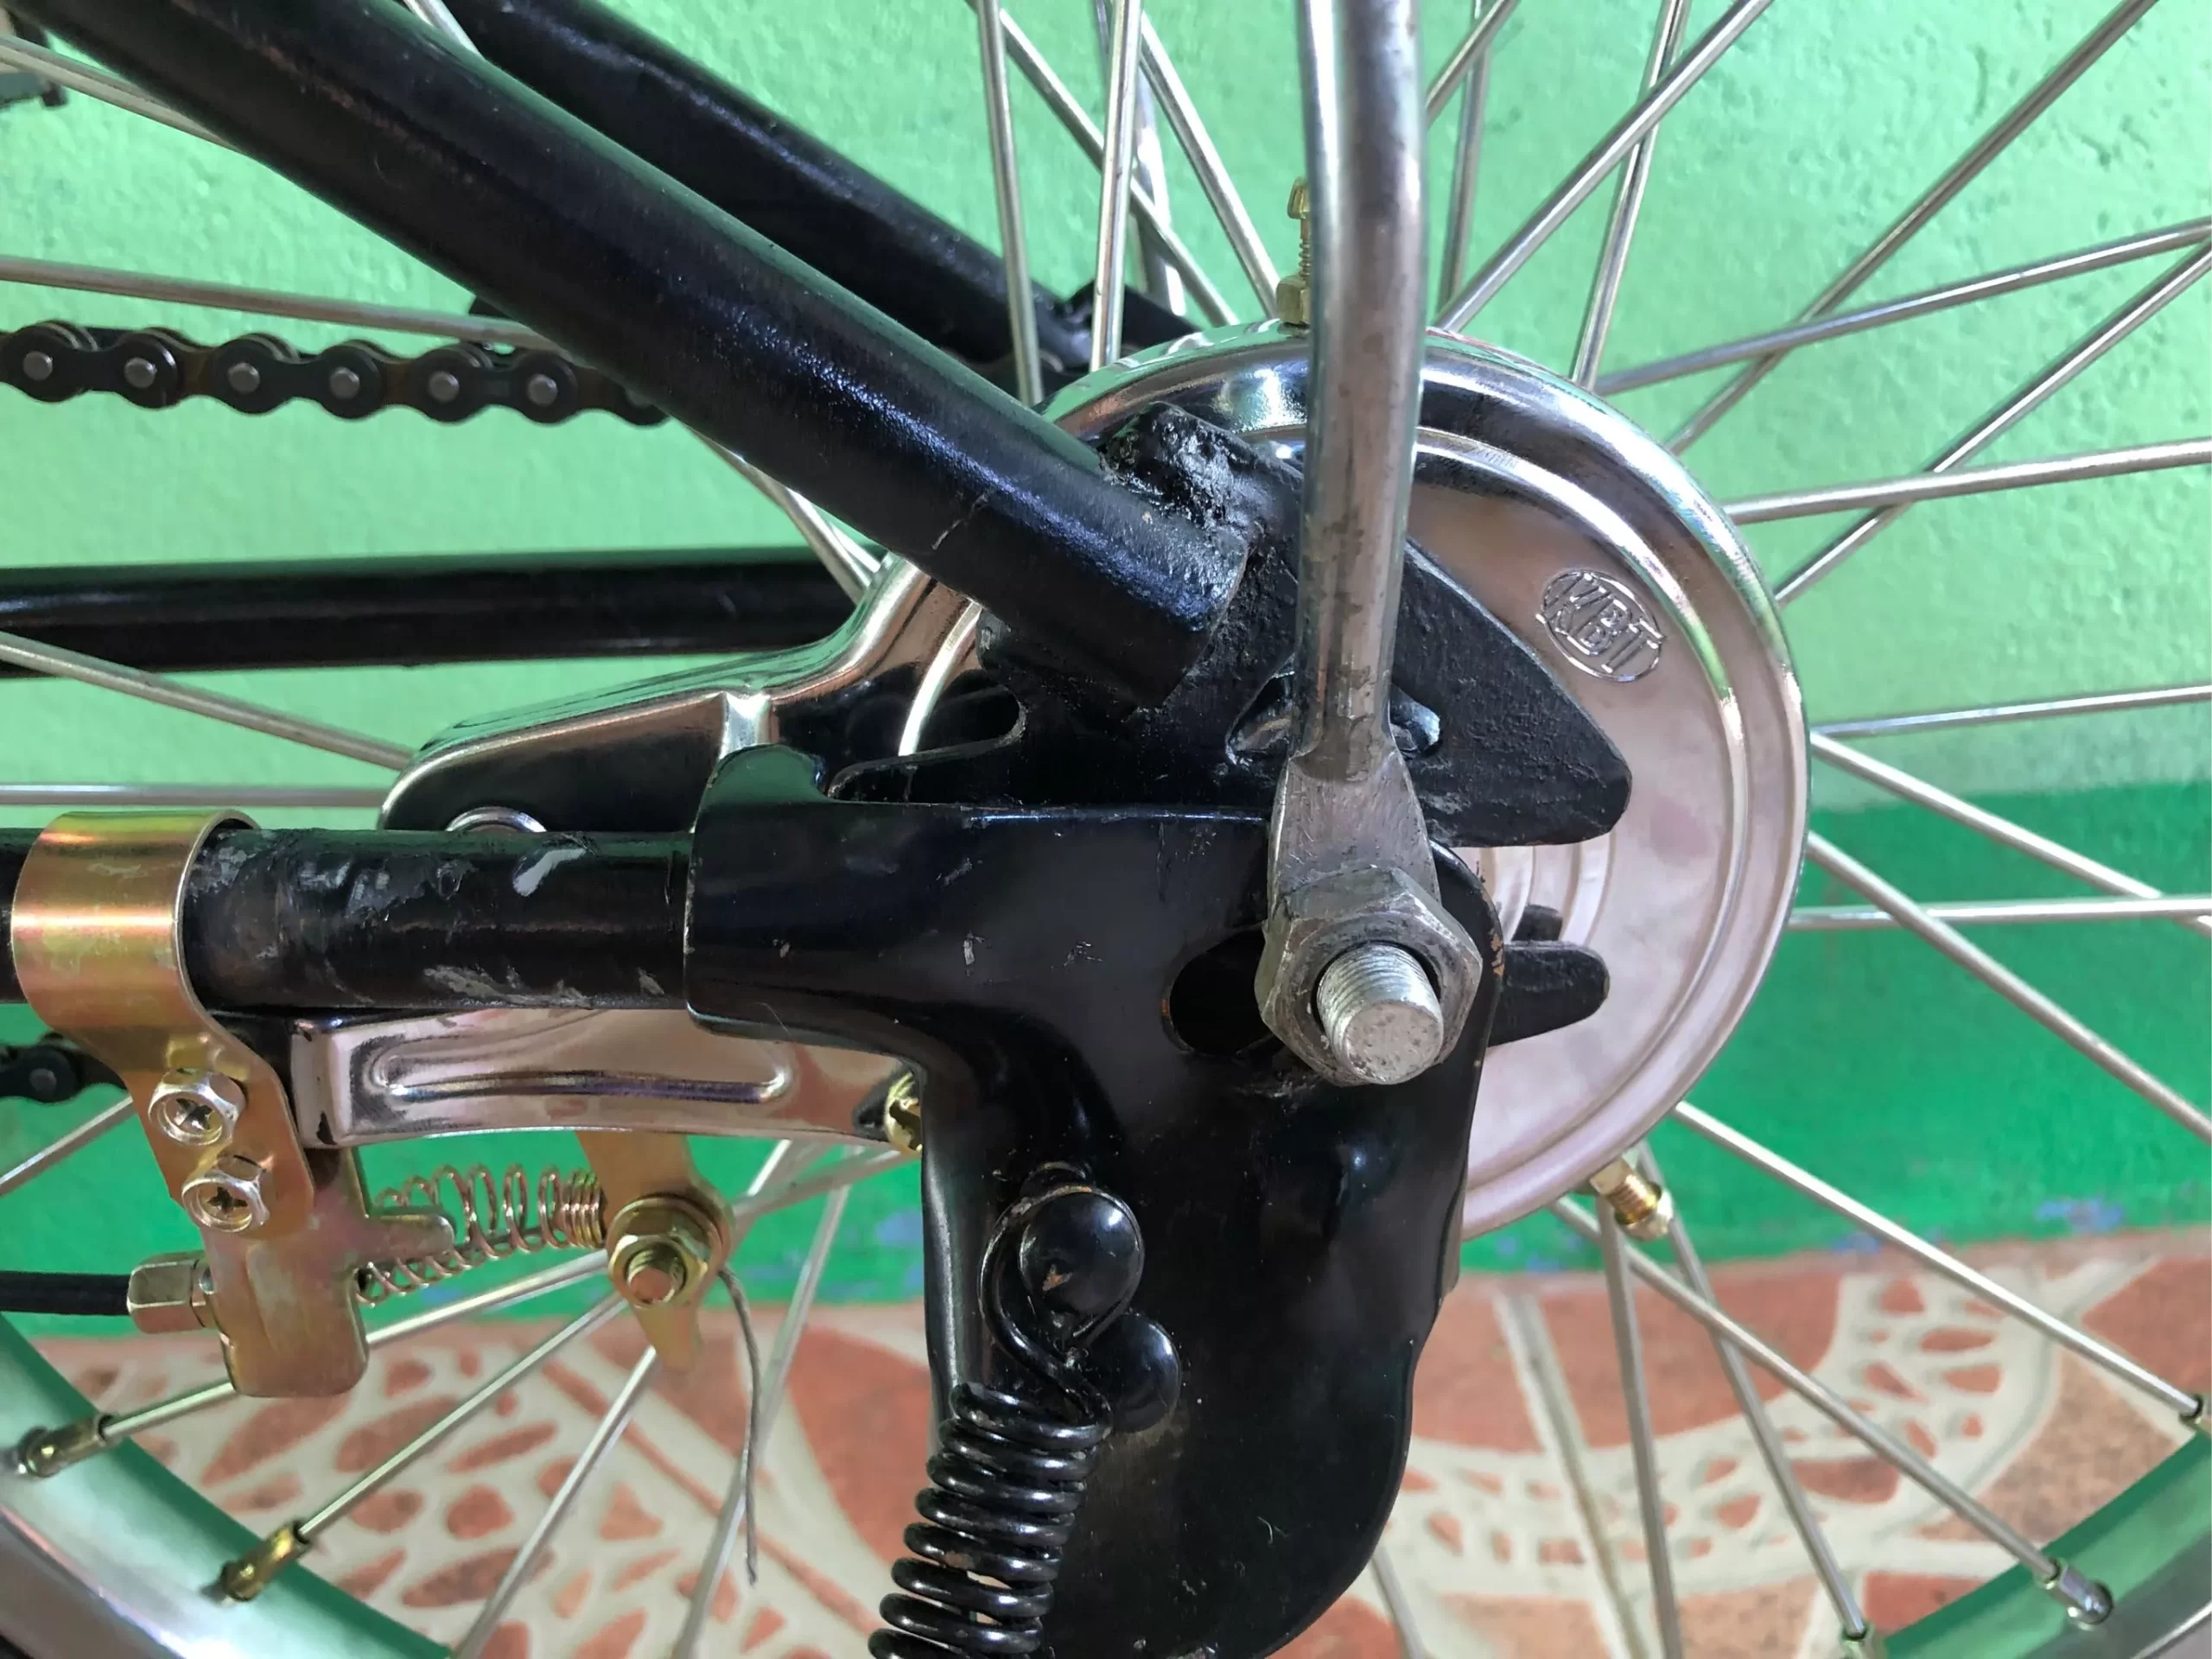 Types of Bicycle Brakes